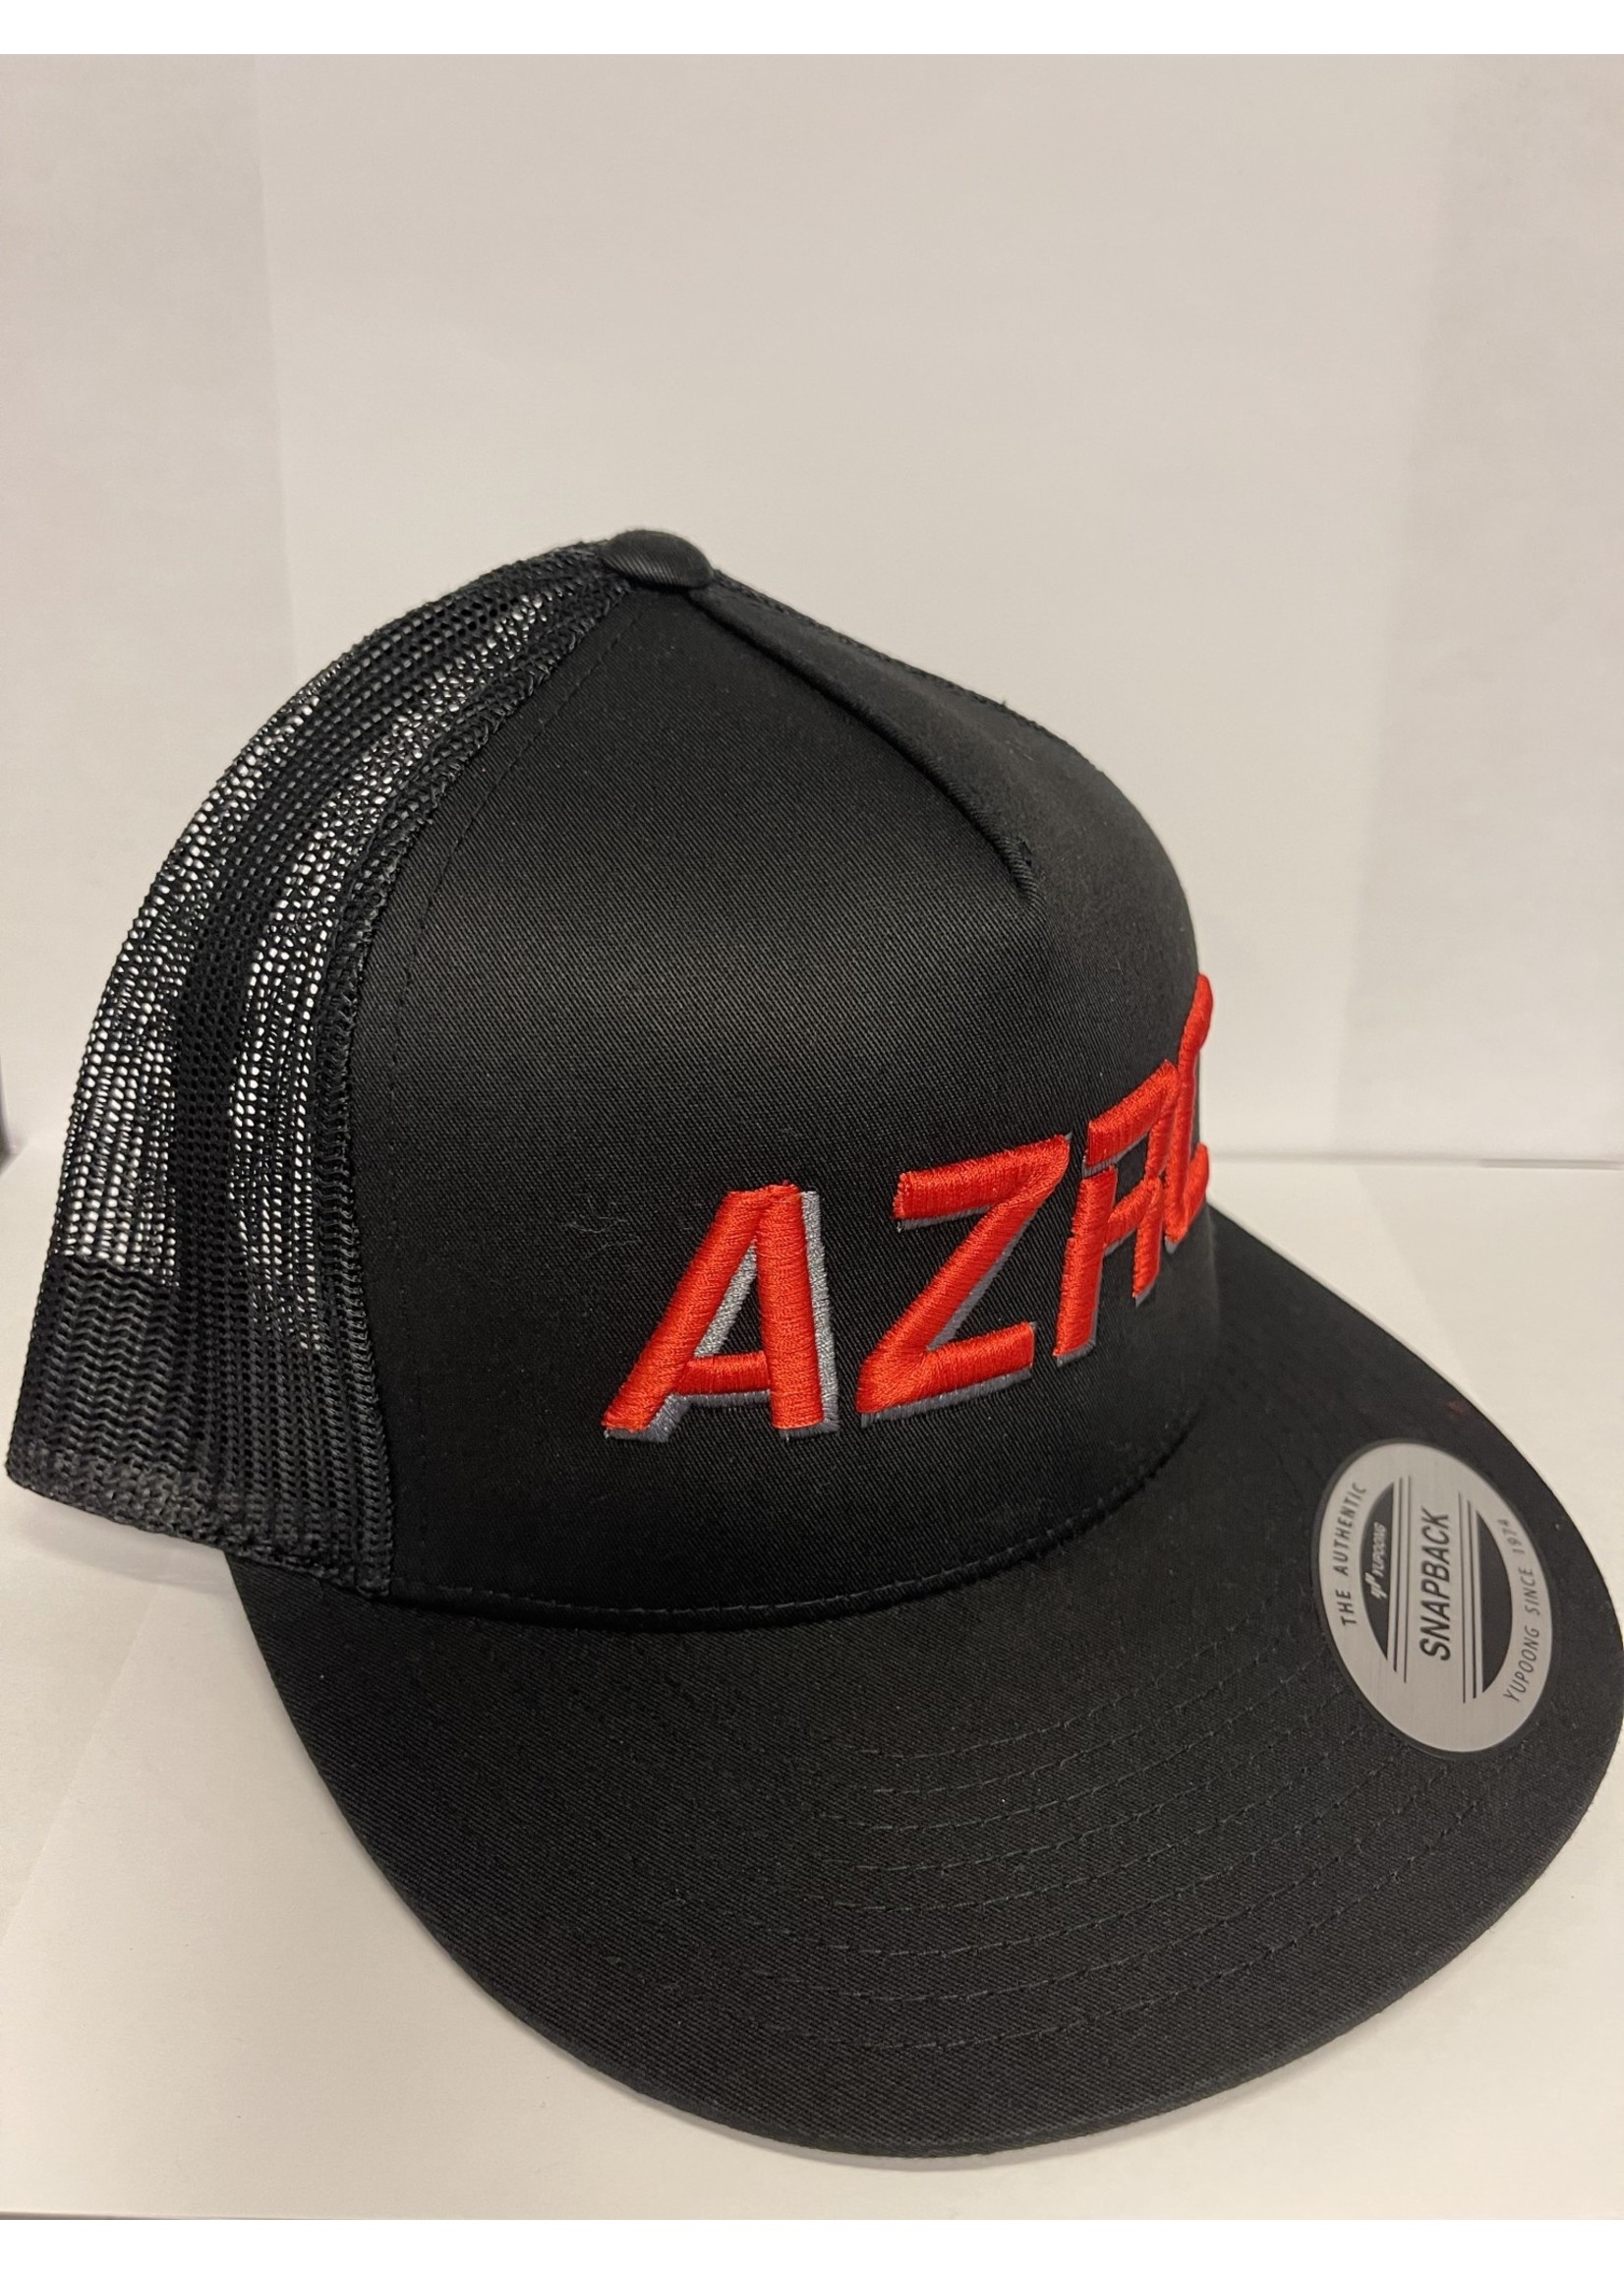 AZRC AZRC Trucker Hat Black/Red (SnapBack)